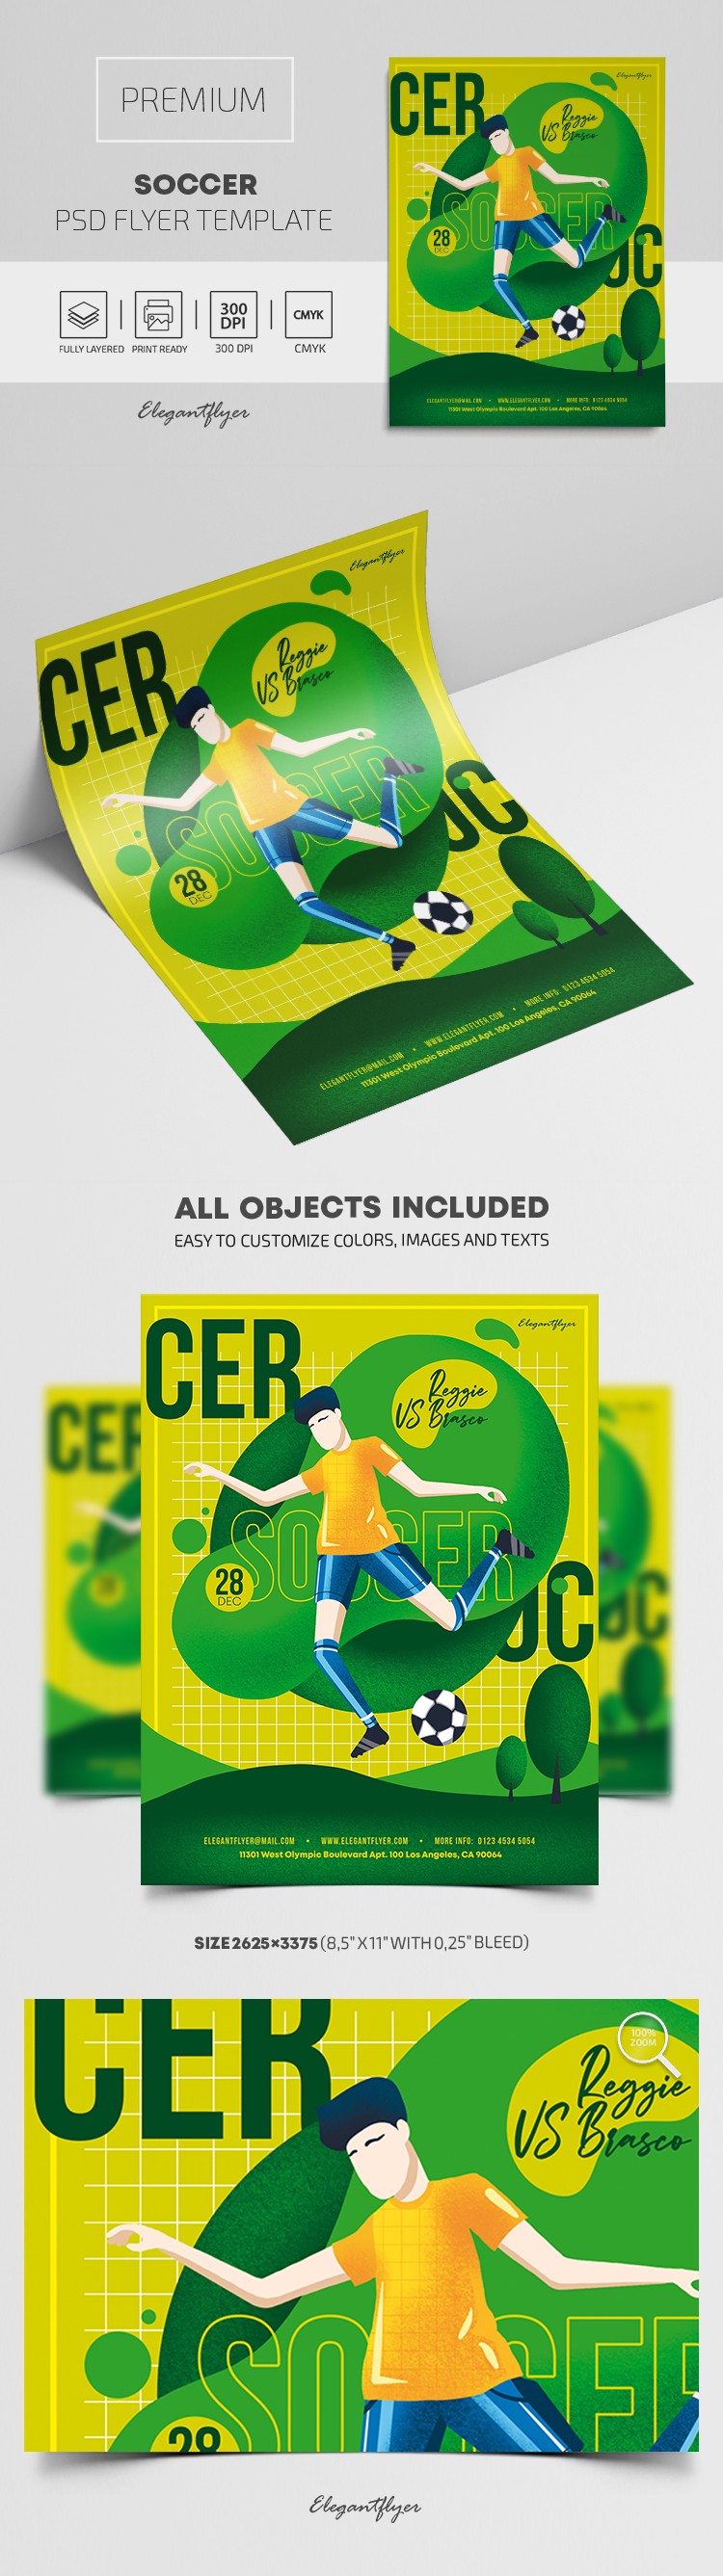 Soccer Flyer by ElegantFlyer